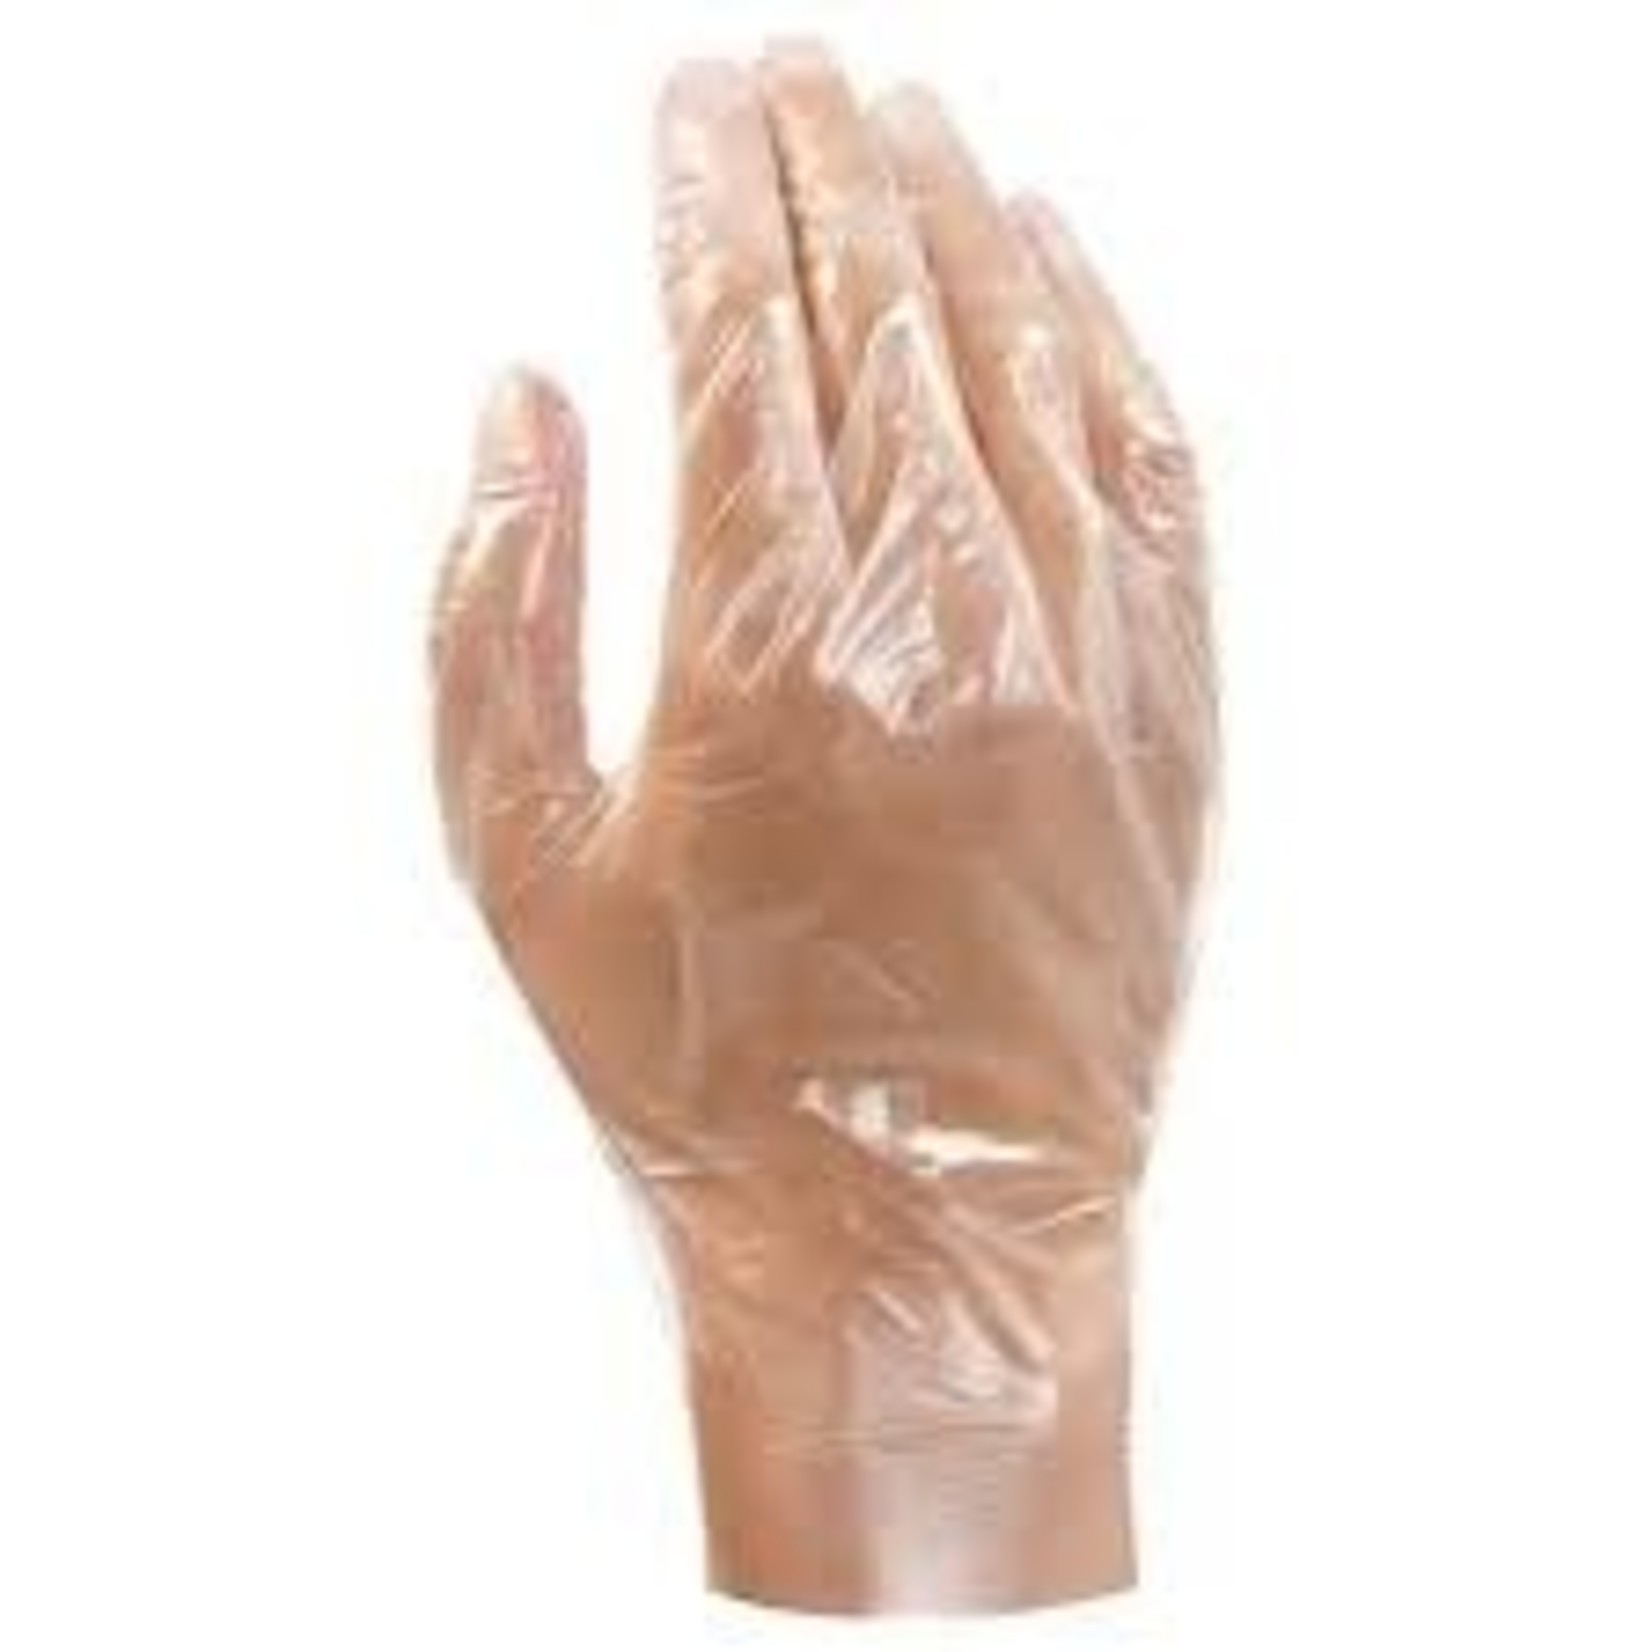 Almedic Copolymer Examination Gloves - 100 Pack